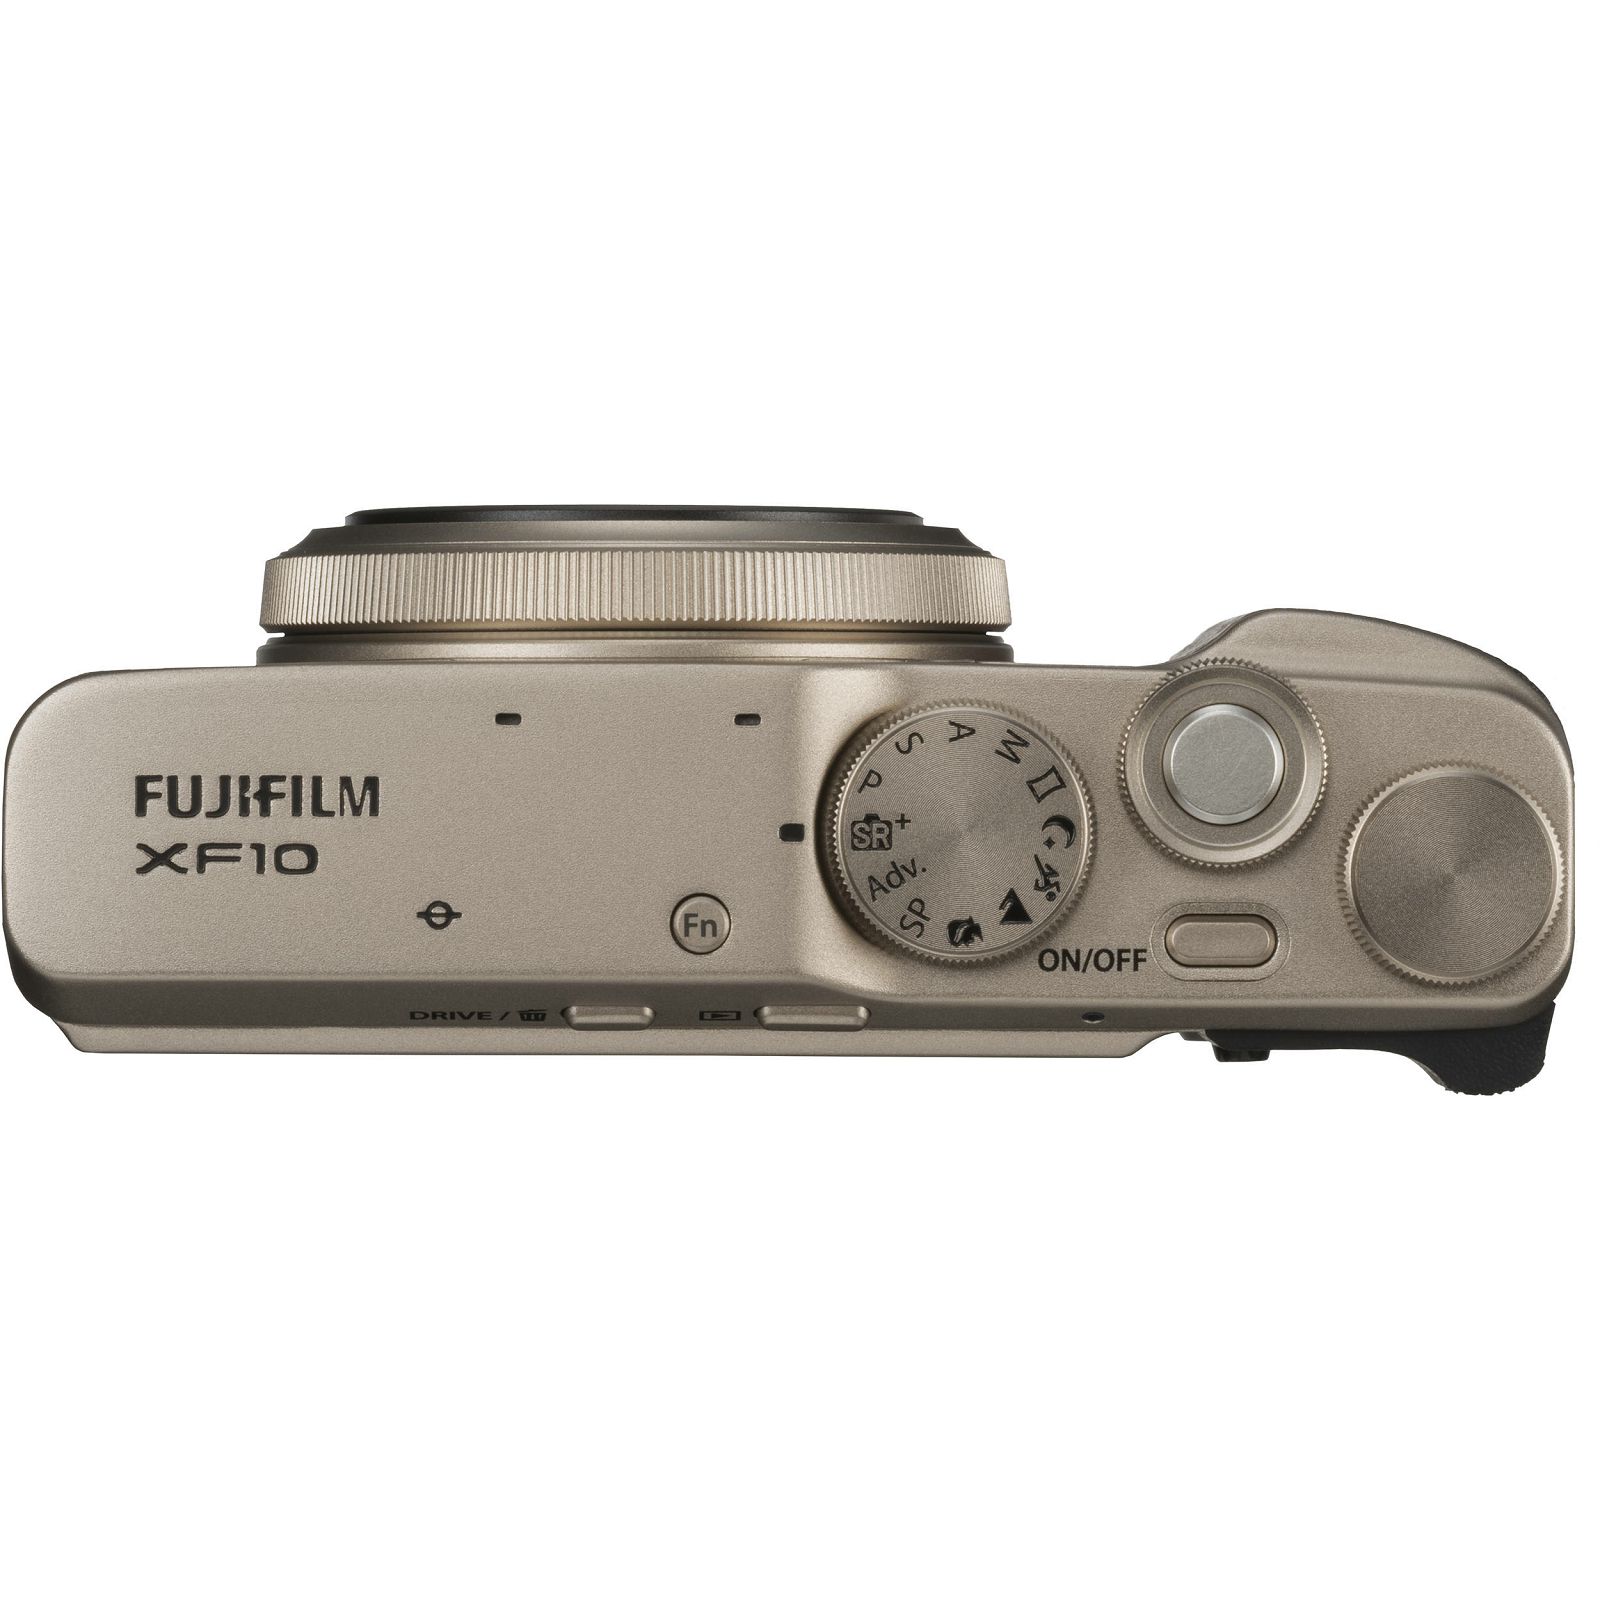 Fujifilm XF10 Champange Gold digitalni fotoaparat s integriranim objektivom Fuji Fuji Finepix XF10